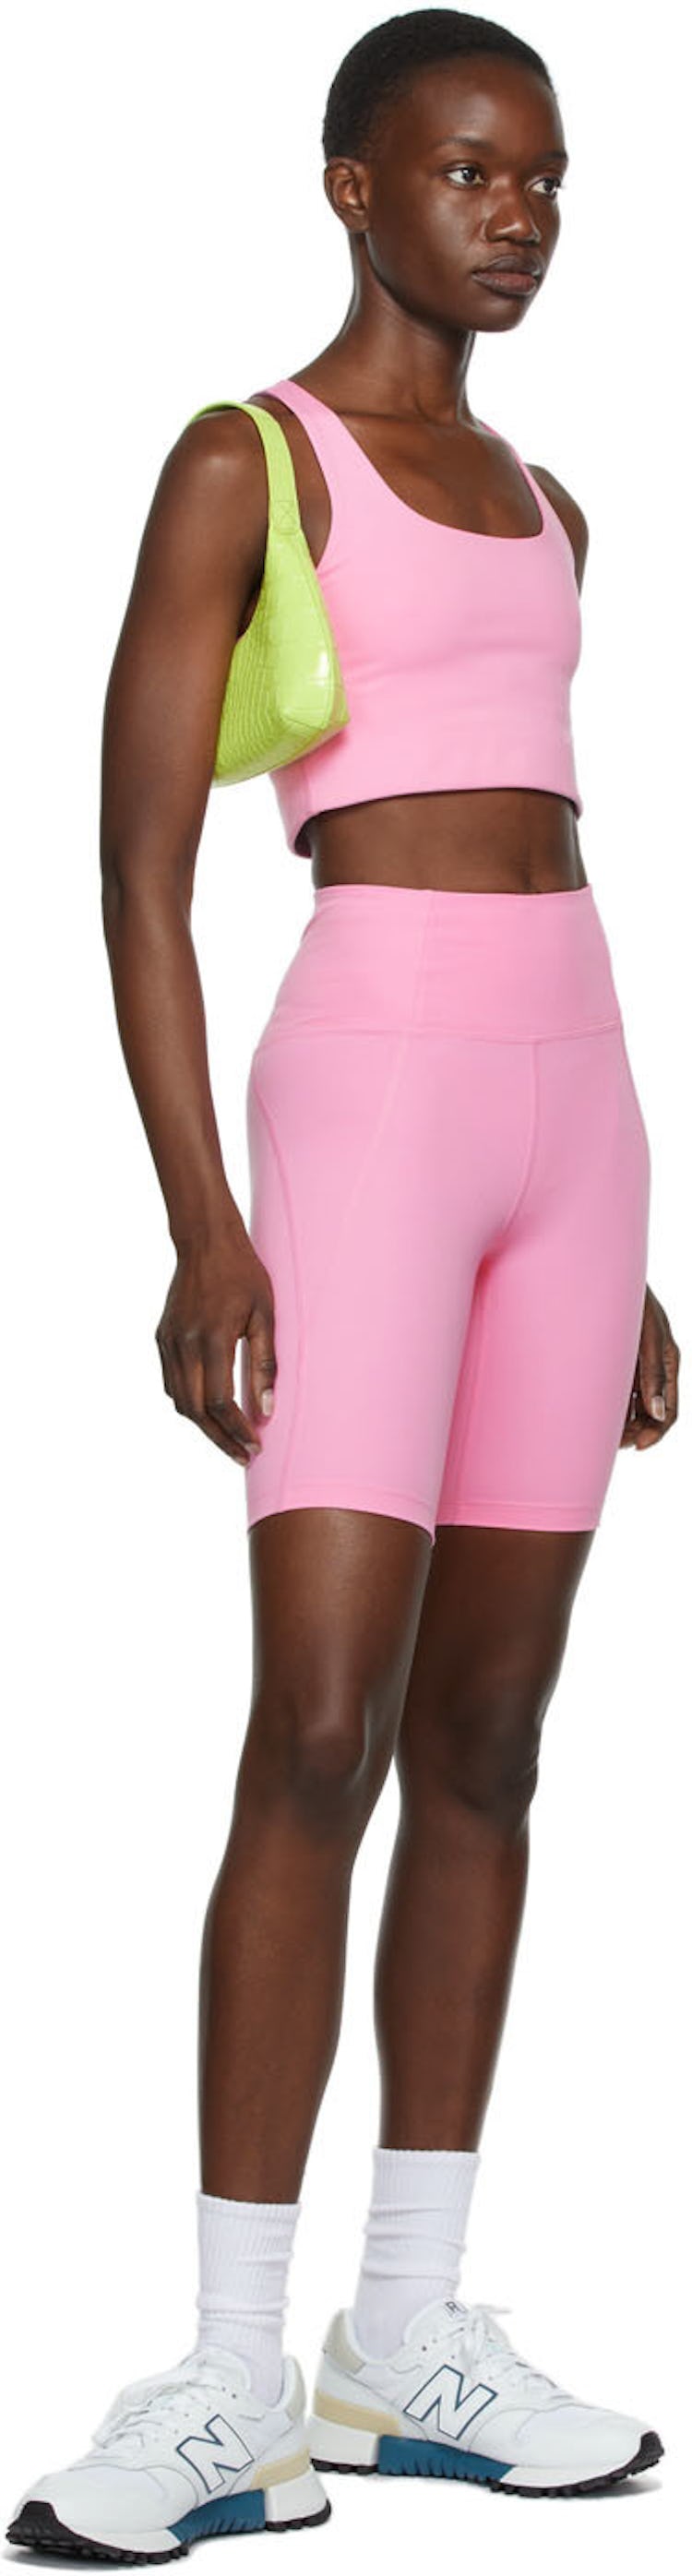 SSENSE Exclusive Pink Bike Shorts: additional image